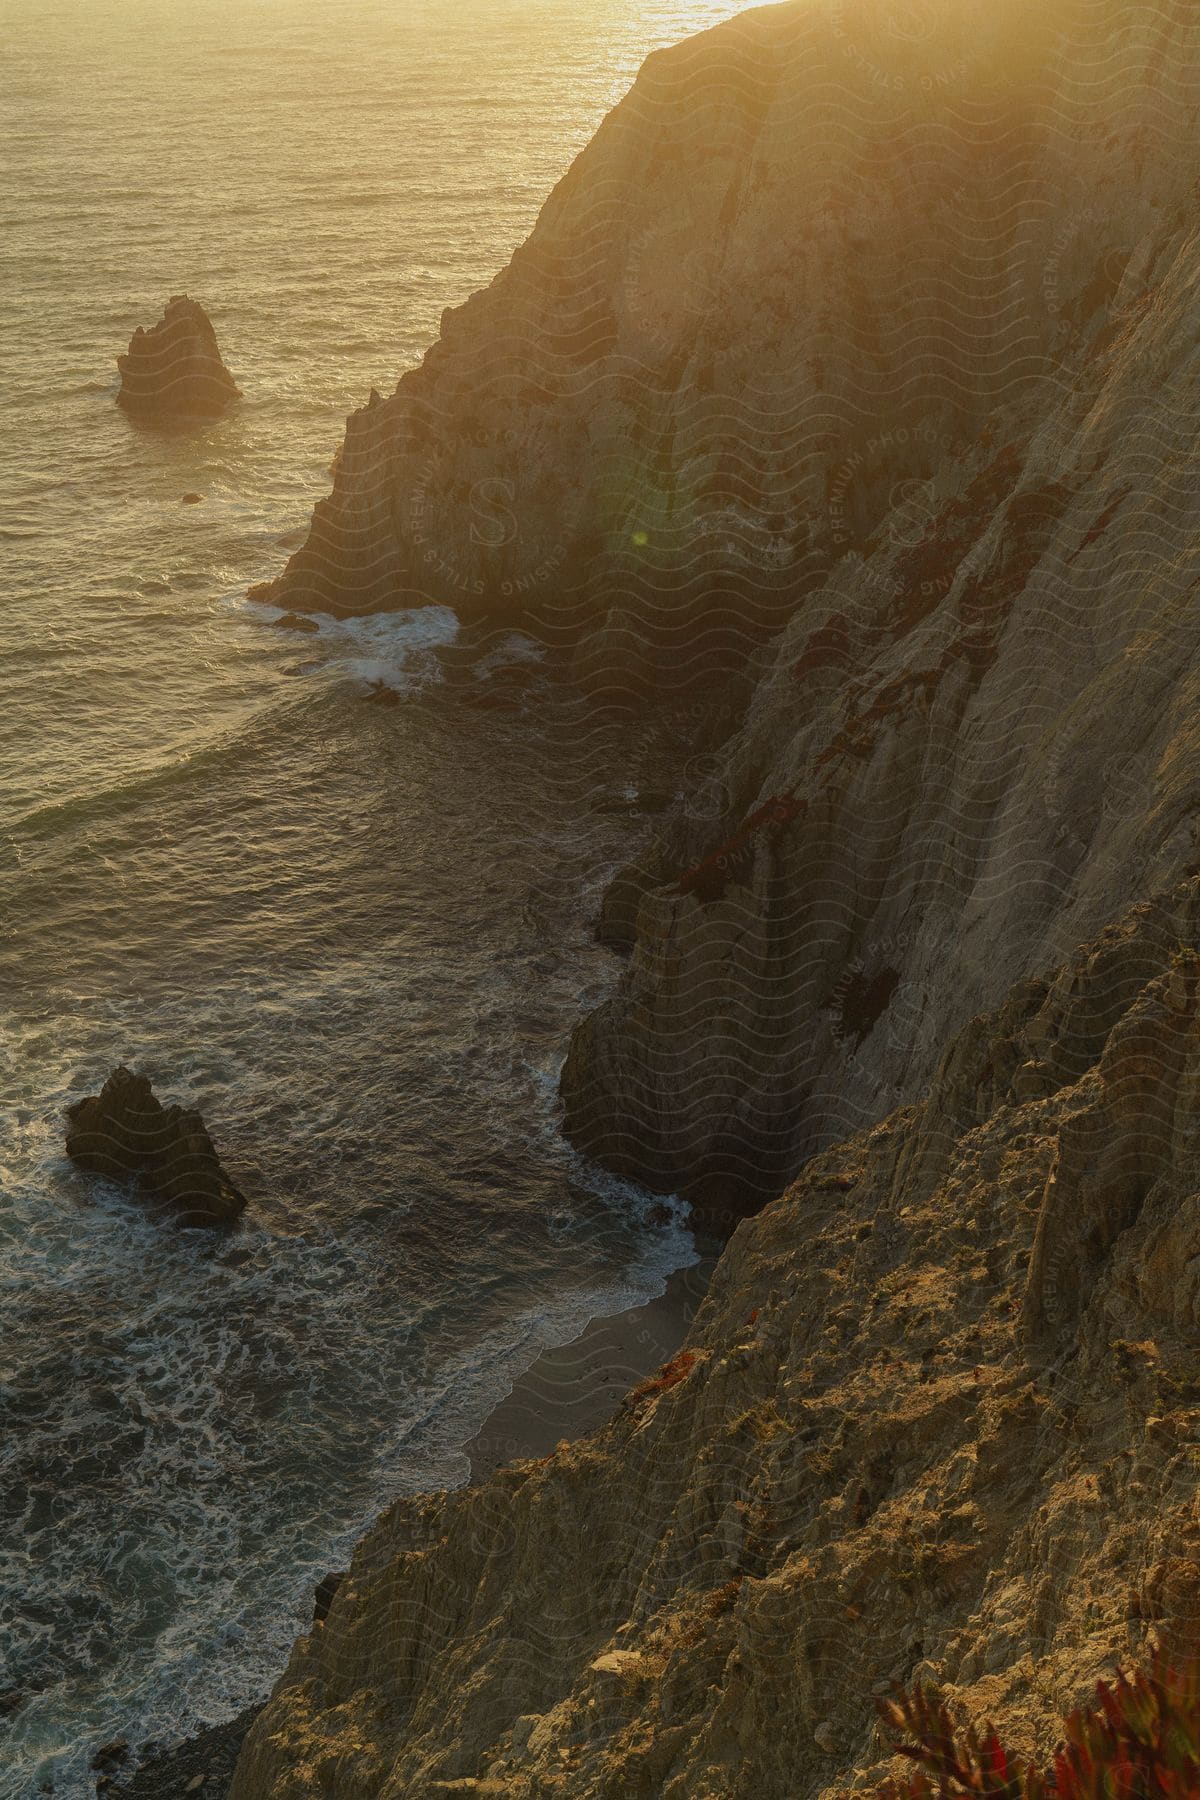 Setting sun glares across rocky seaside cliffs.